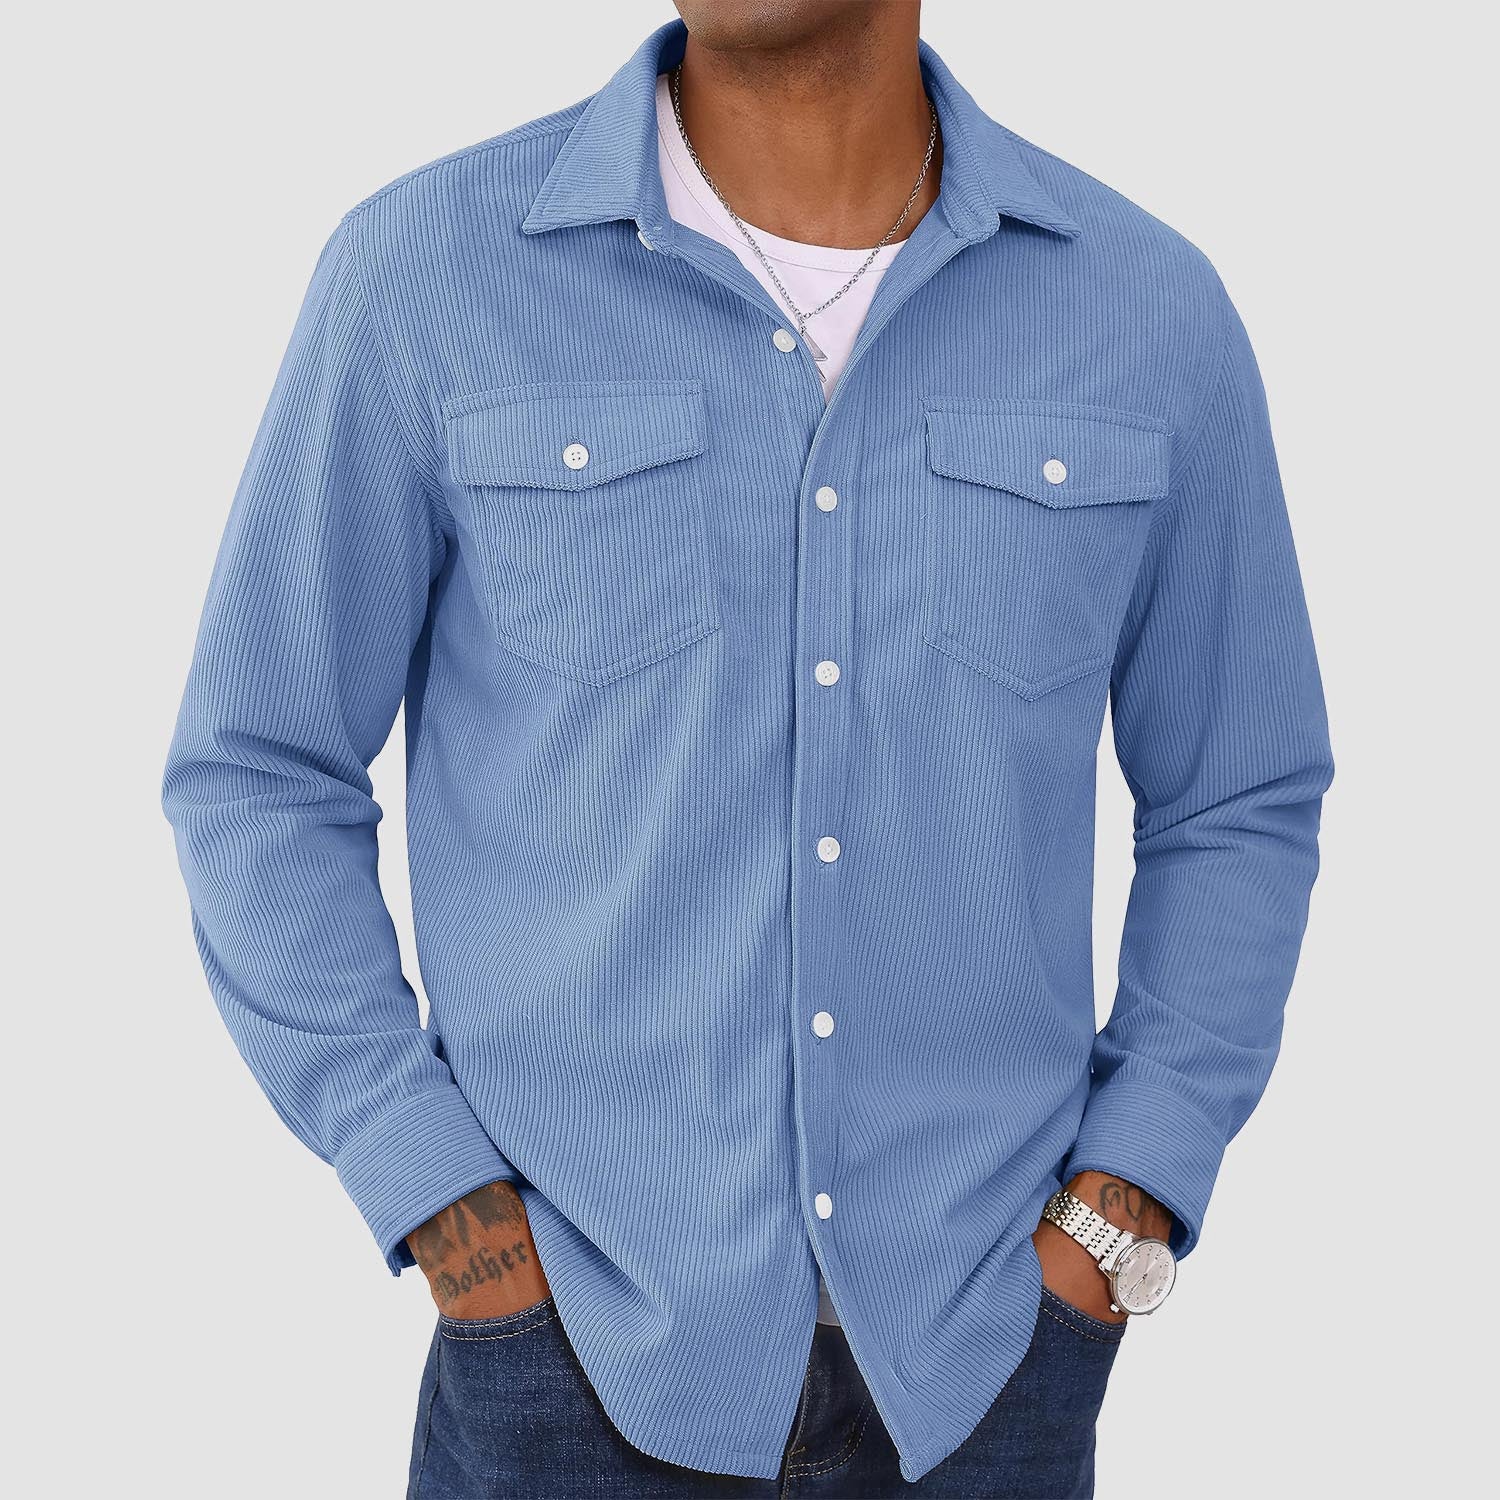 Men's Long Sleeve Shirts | Smart & Casual Shirts | MAGCOMSEN